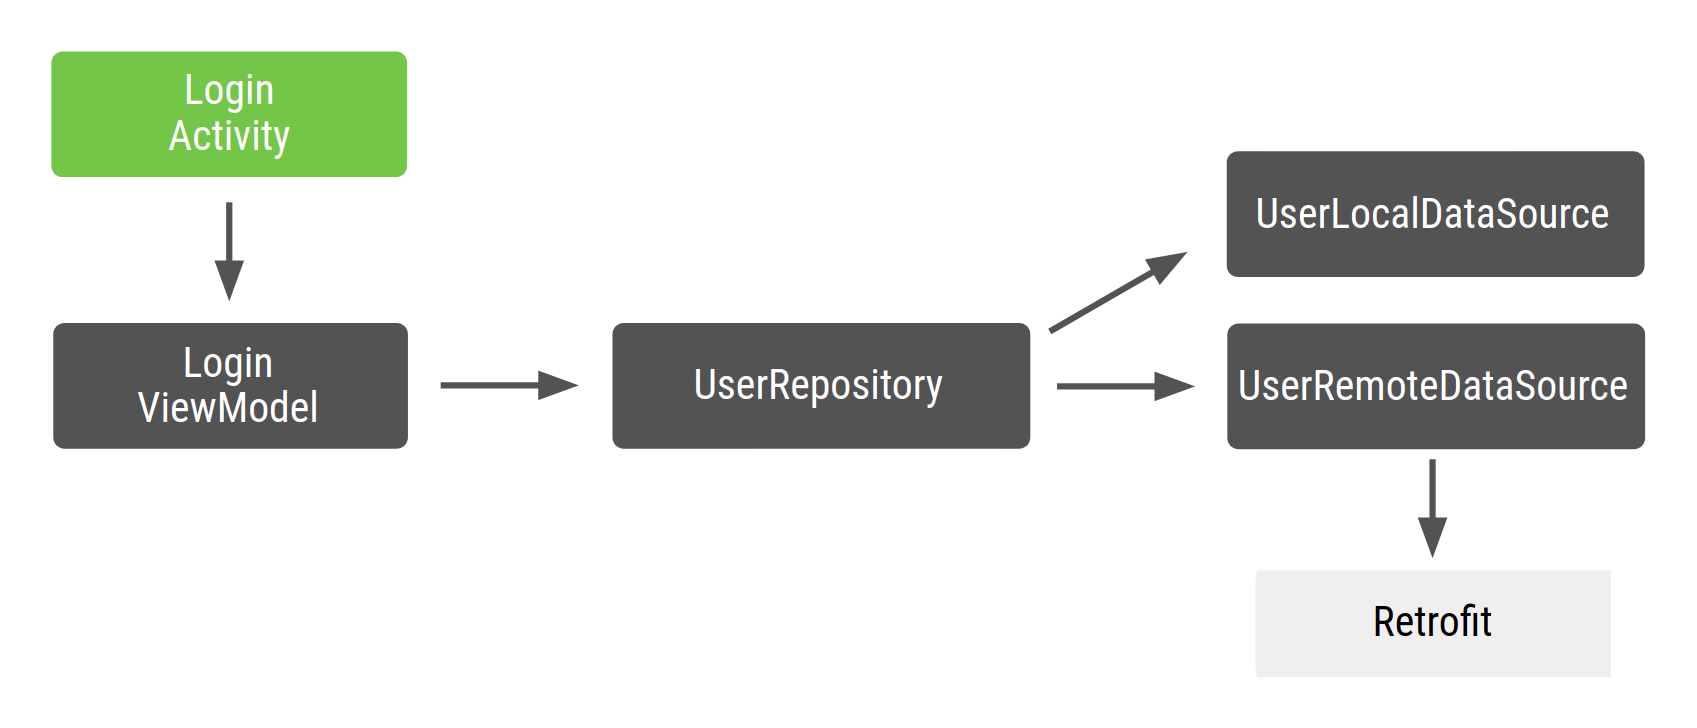 LoginActivity 依附於 LoginViewModel，取決於 UserRepository，這取決於 UserLocalDataSource 和 UserRemoteDataSource，而這取決於 Retrofit。